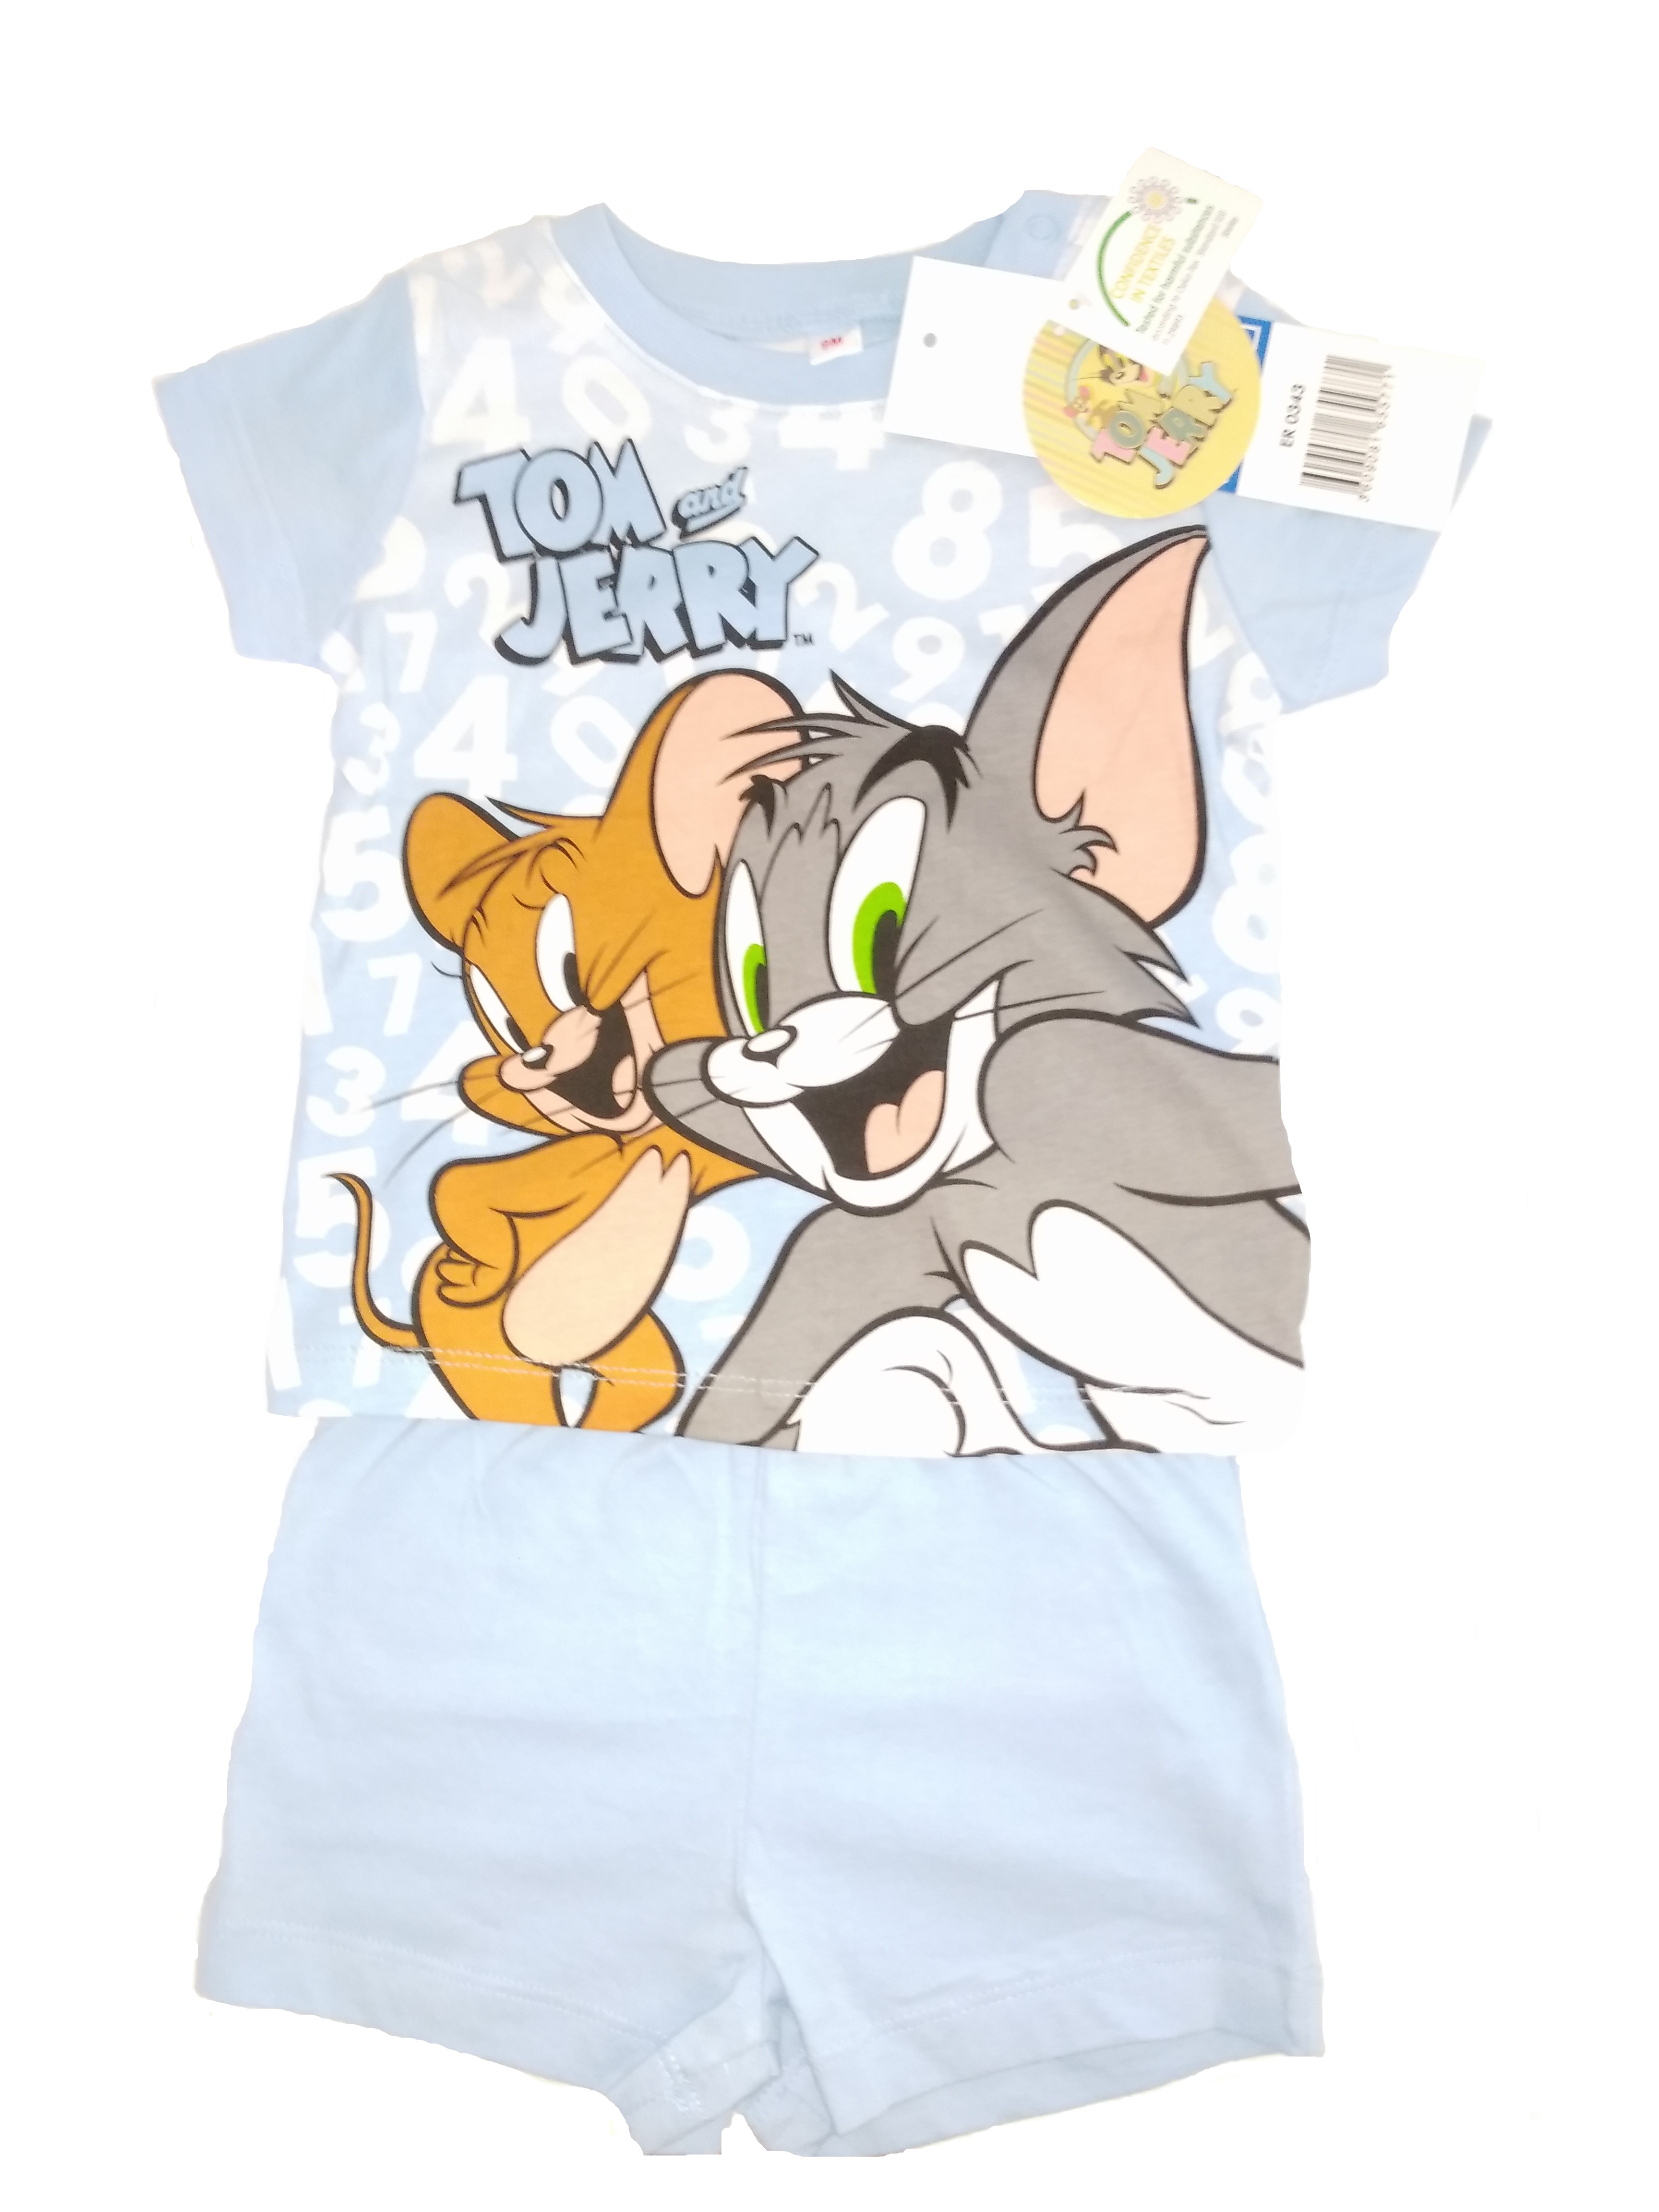 Tom & Jerry Pyjama für Kinder Hellblau Größe 86cm (24 Monate)